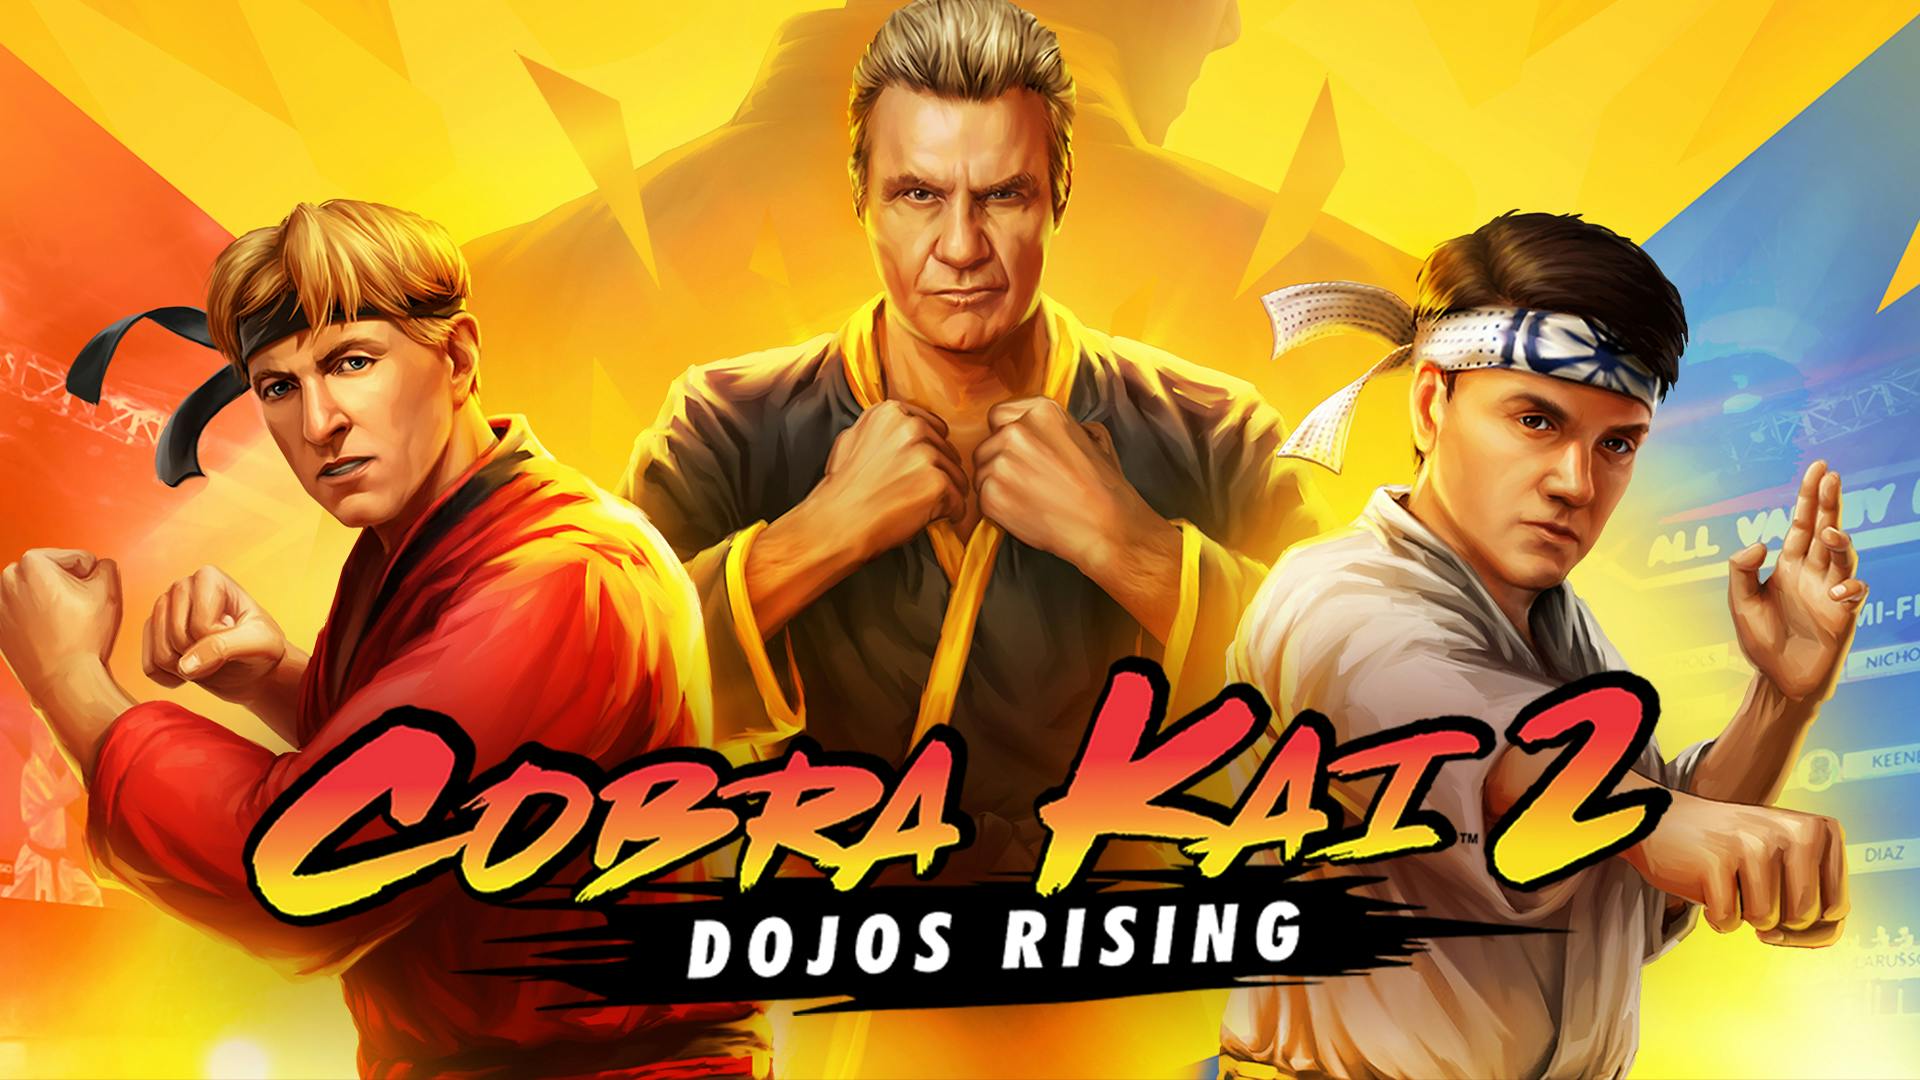 Cobra kai 2. Cobra Kai 2: Dojos Rising. Cobra Kai 2 игра.